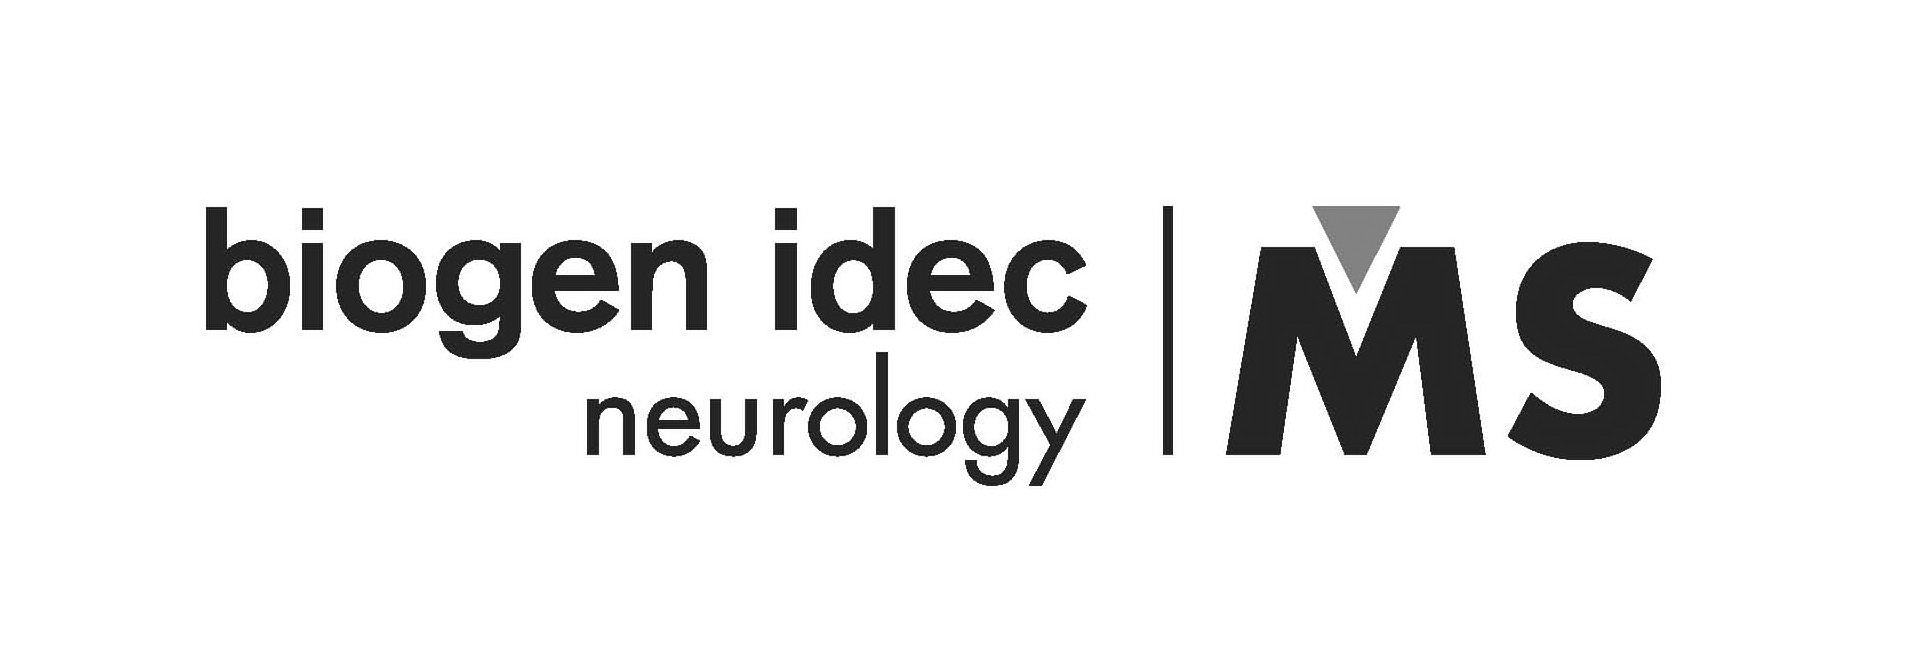  BIOGEN IDEC NEUROLOGY | MS